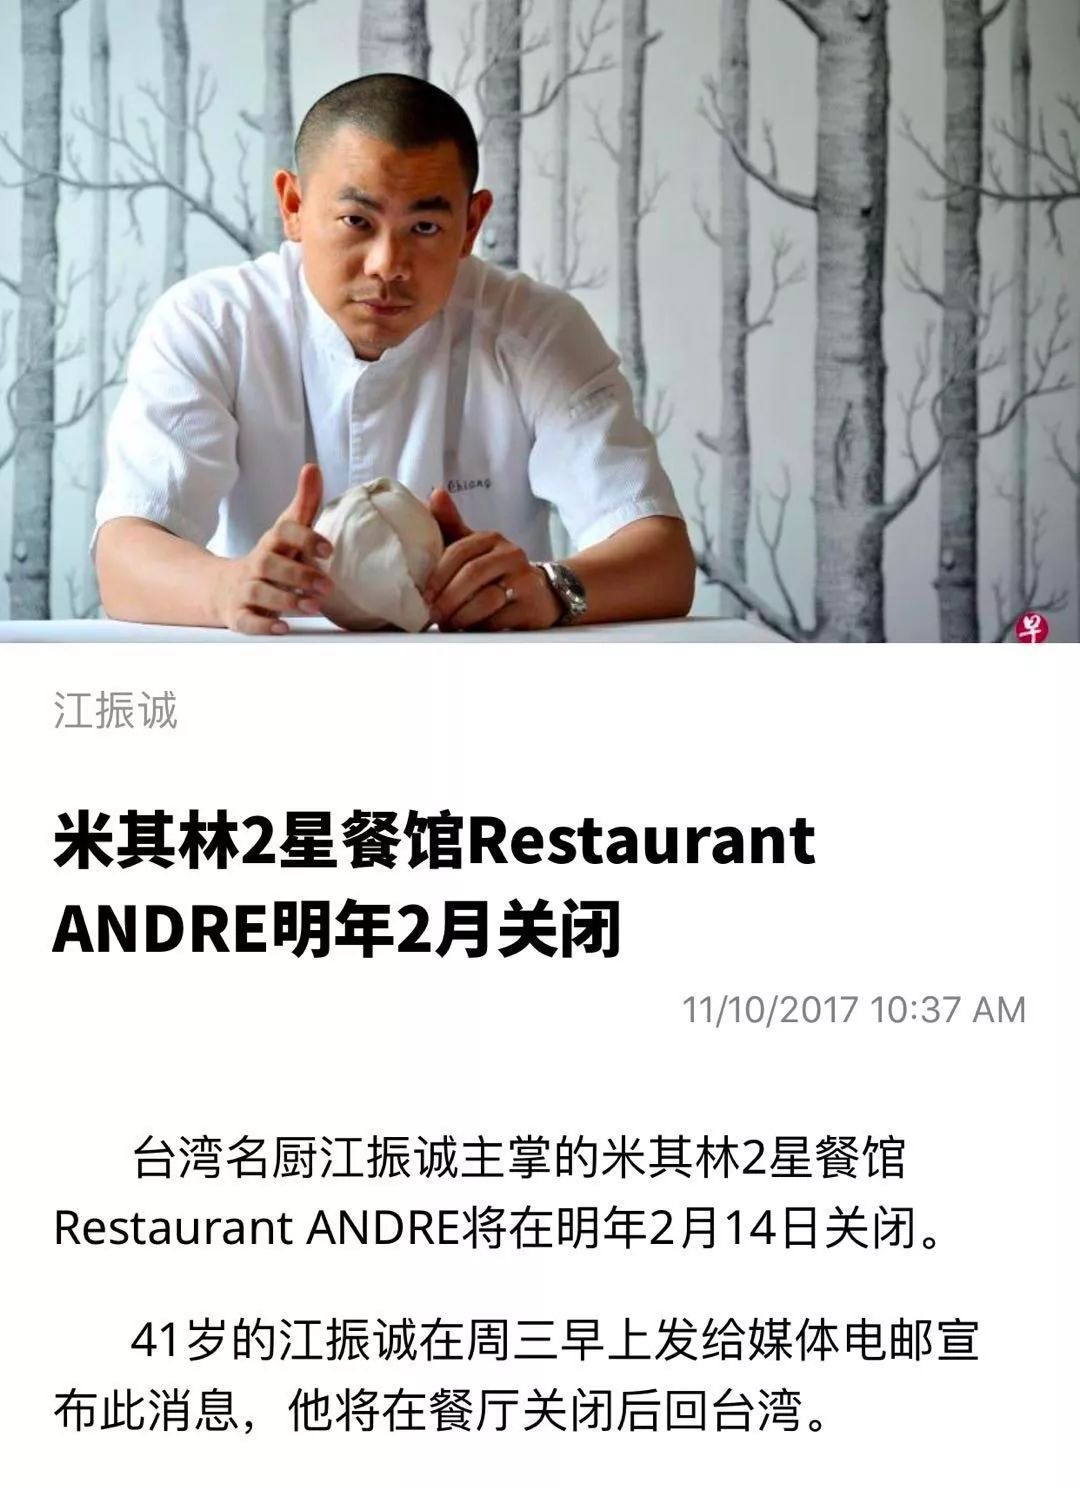 Restaurant ANDRE早上宣布明年2月结束营业，价格瞬间翻倍！？